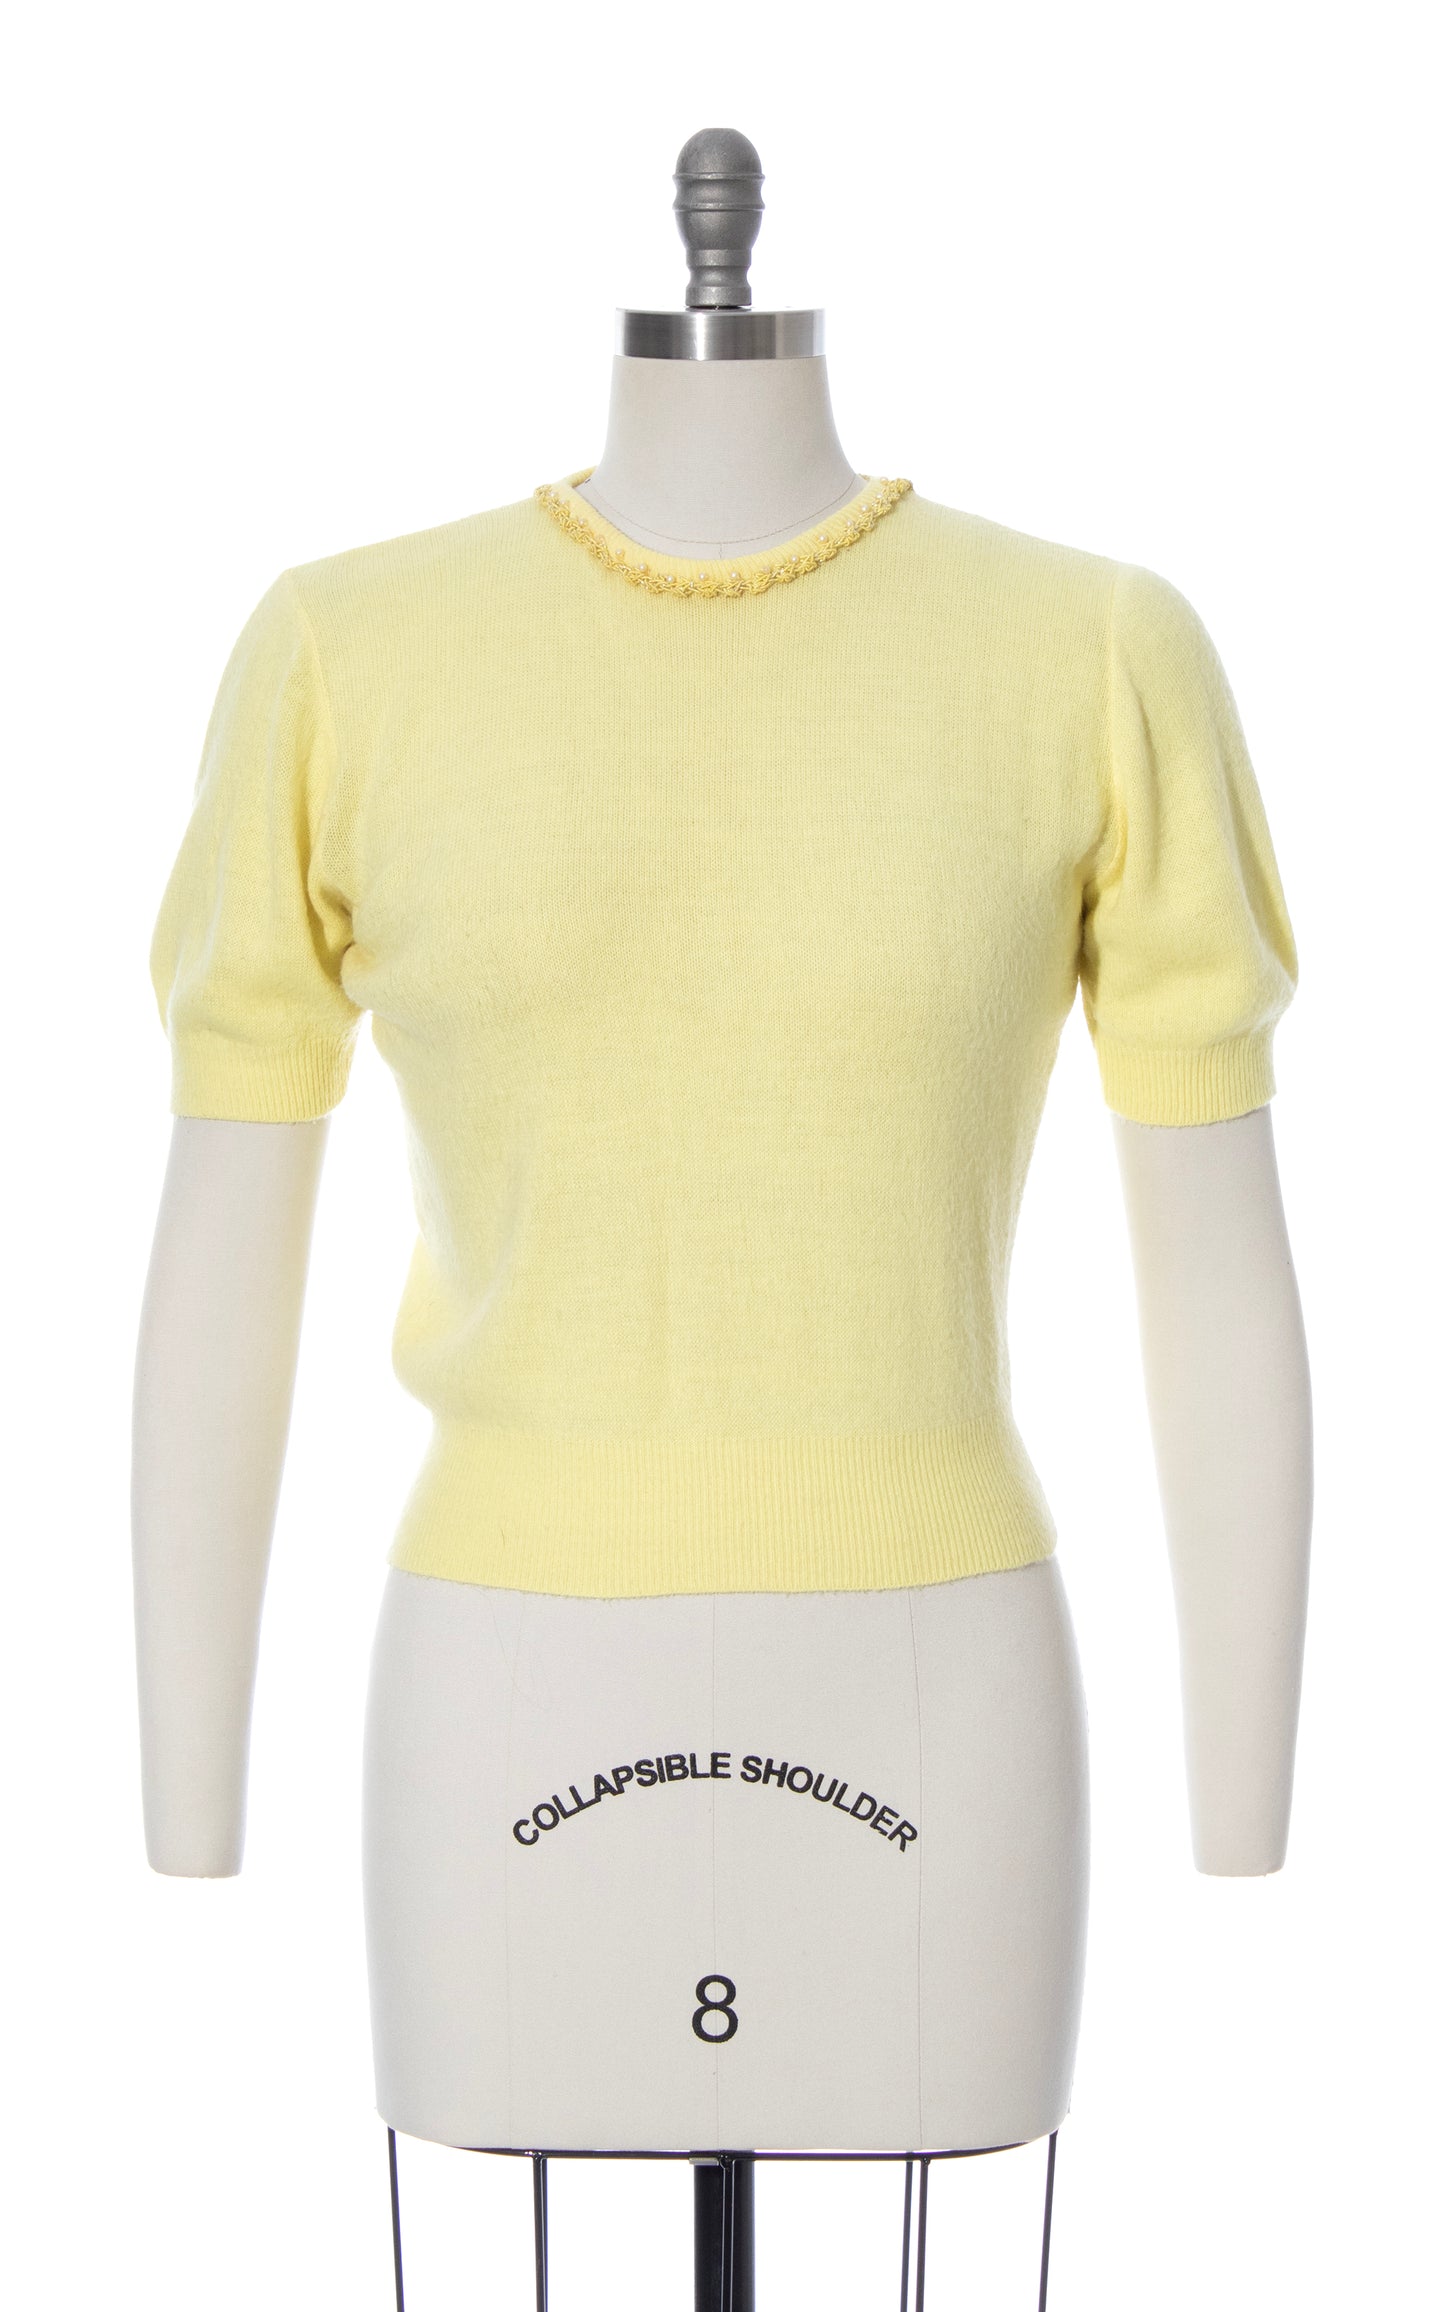 Vintage 50s 60s 1950s 1960s Beaded Light Yellow Knit Acrylic Sweater Top BirthdayLifeVintage